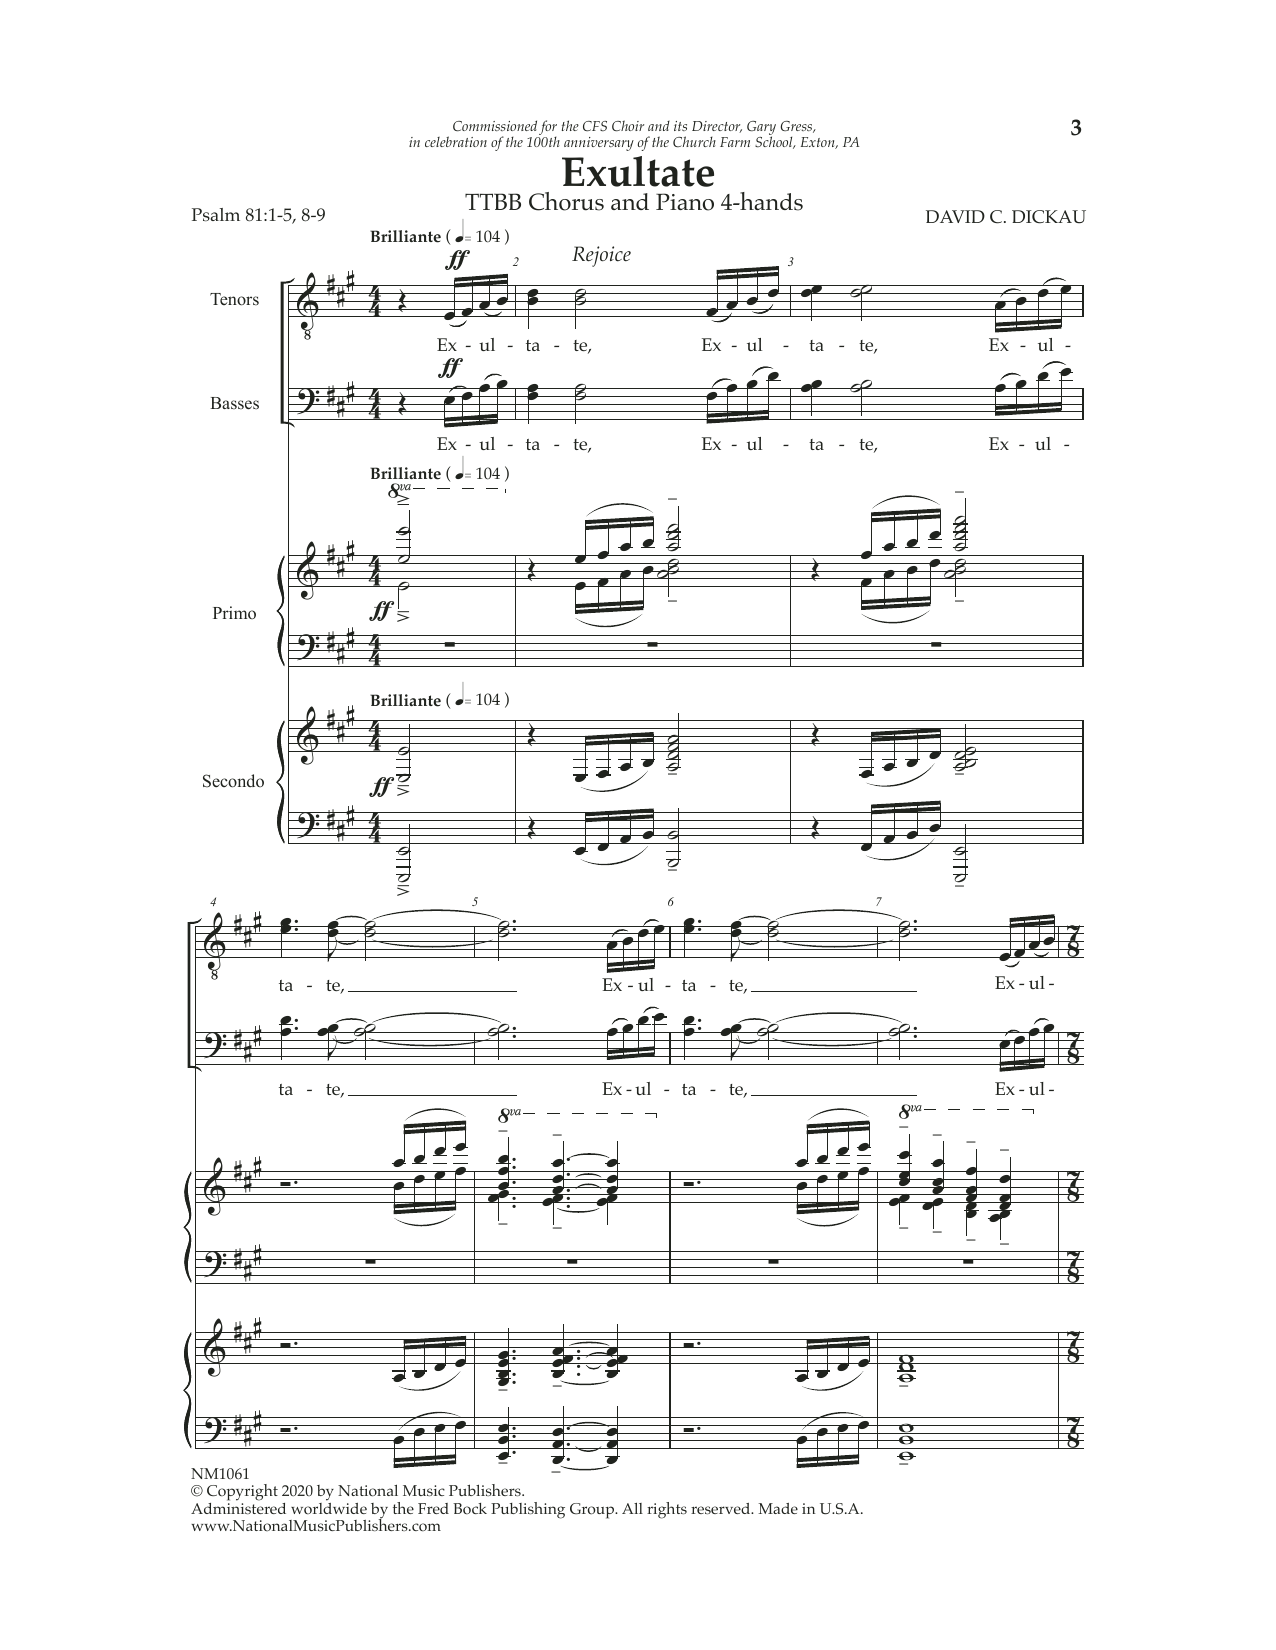 David Dickau Exultate Sheet Music Notes & Chords for TTBB Choir - Download or Print PDF